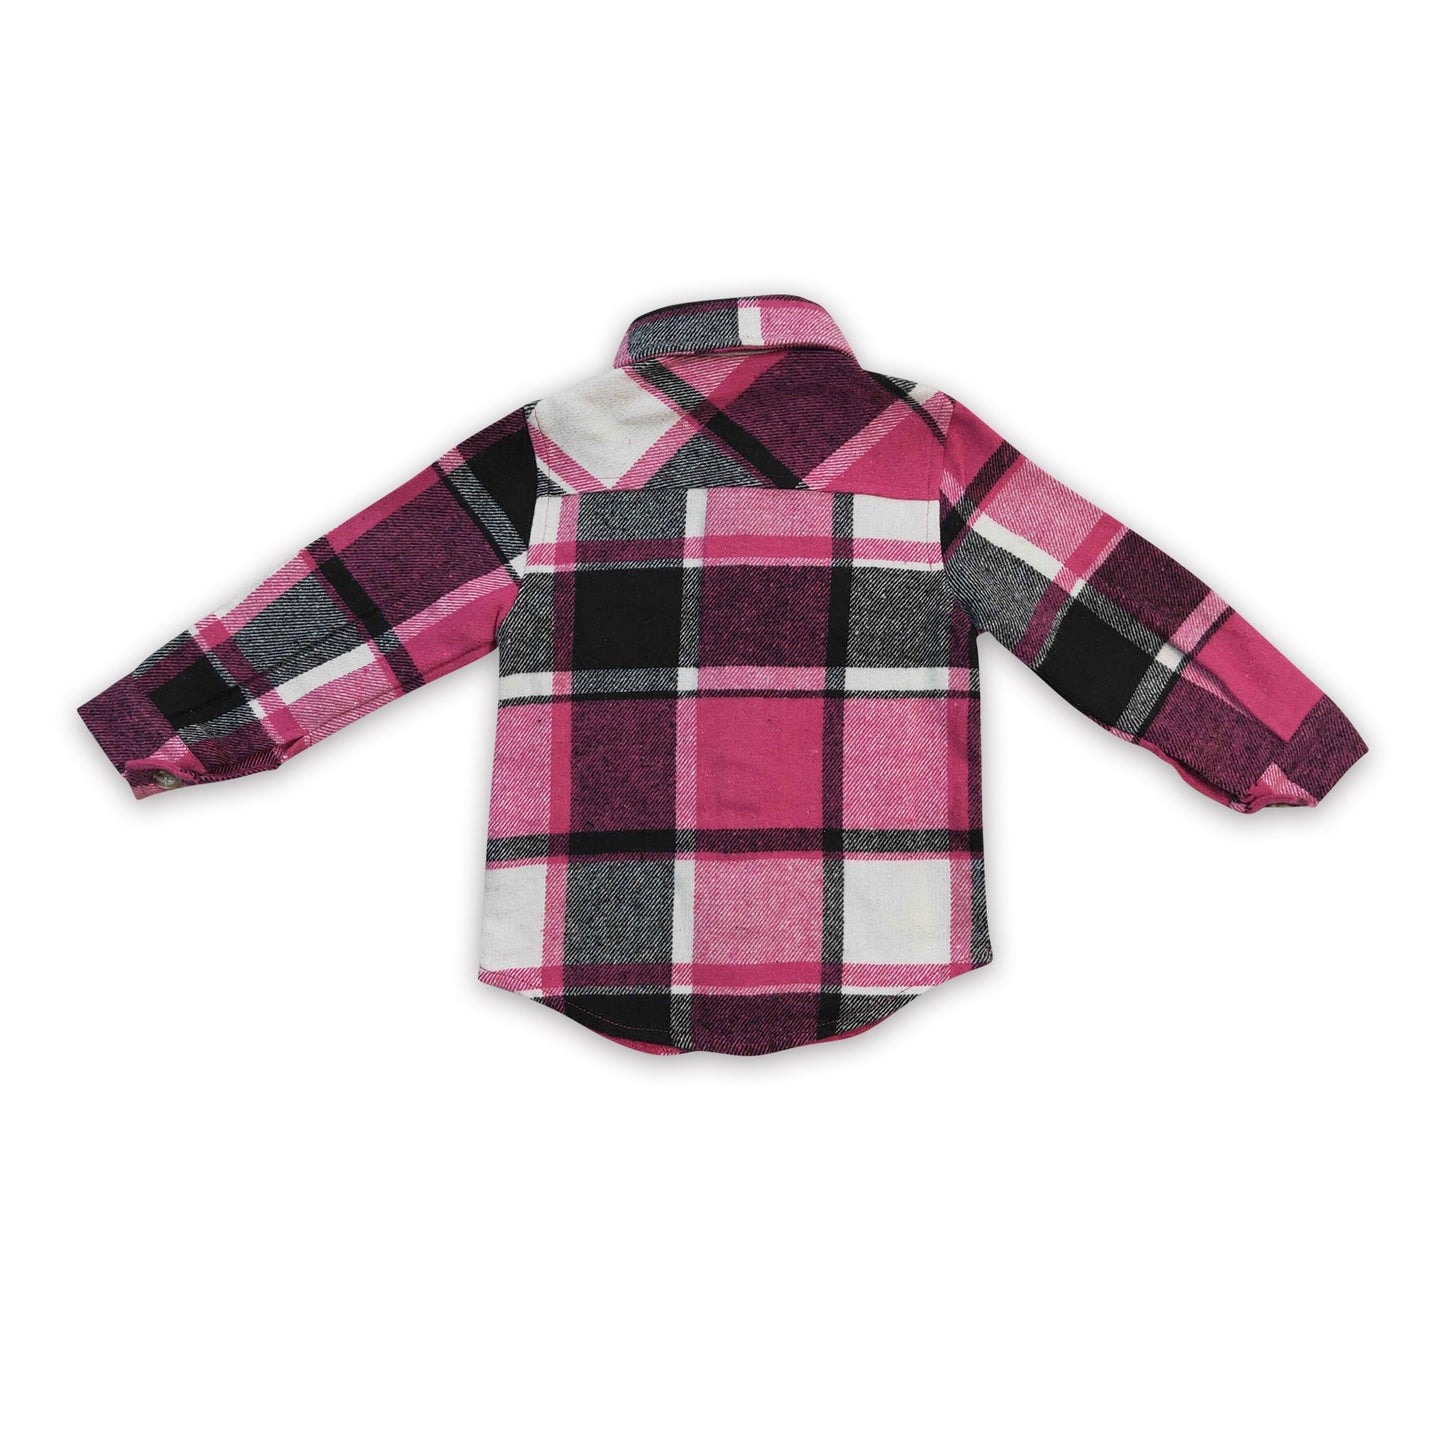 Hot Pink plaid cotton pockets baby girls Valentine's flannel button up shirt